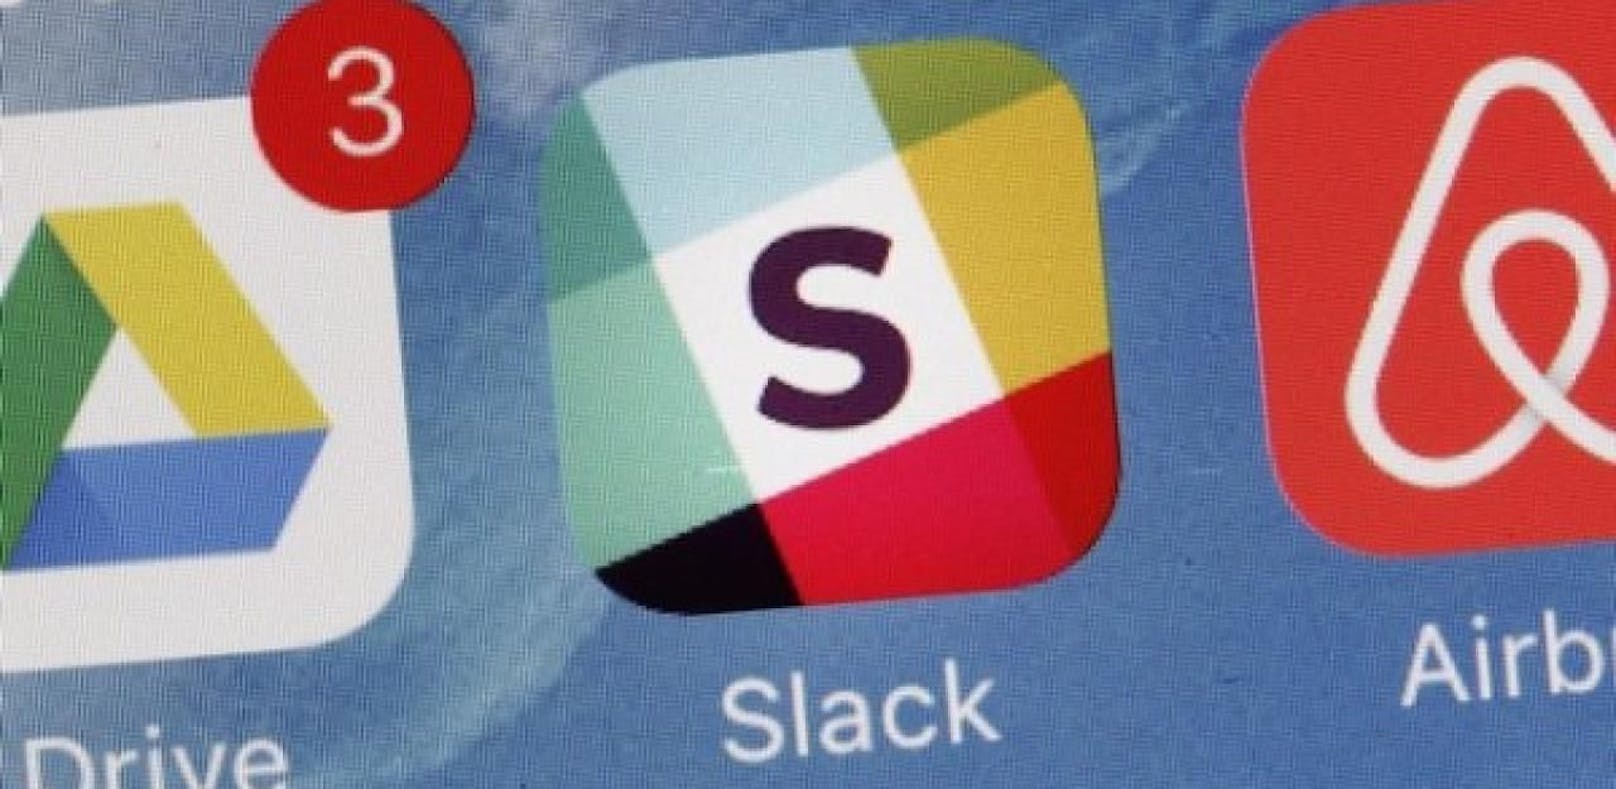 Chat-App Slack startet an der New Yorker Börse